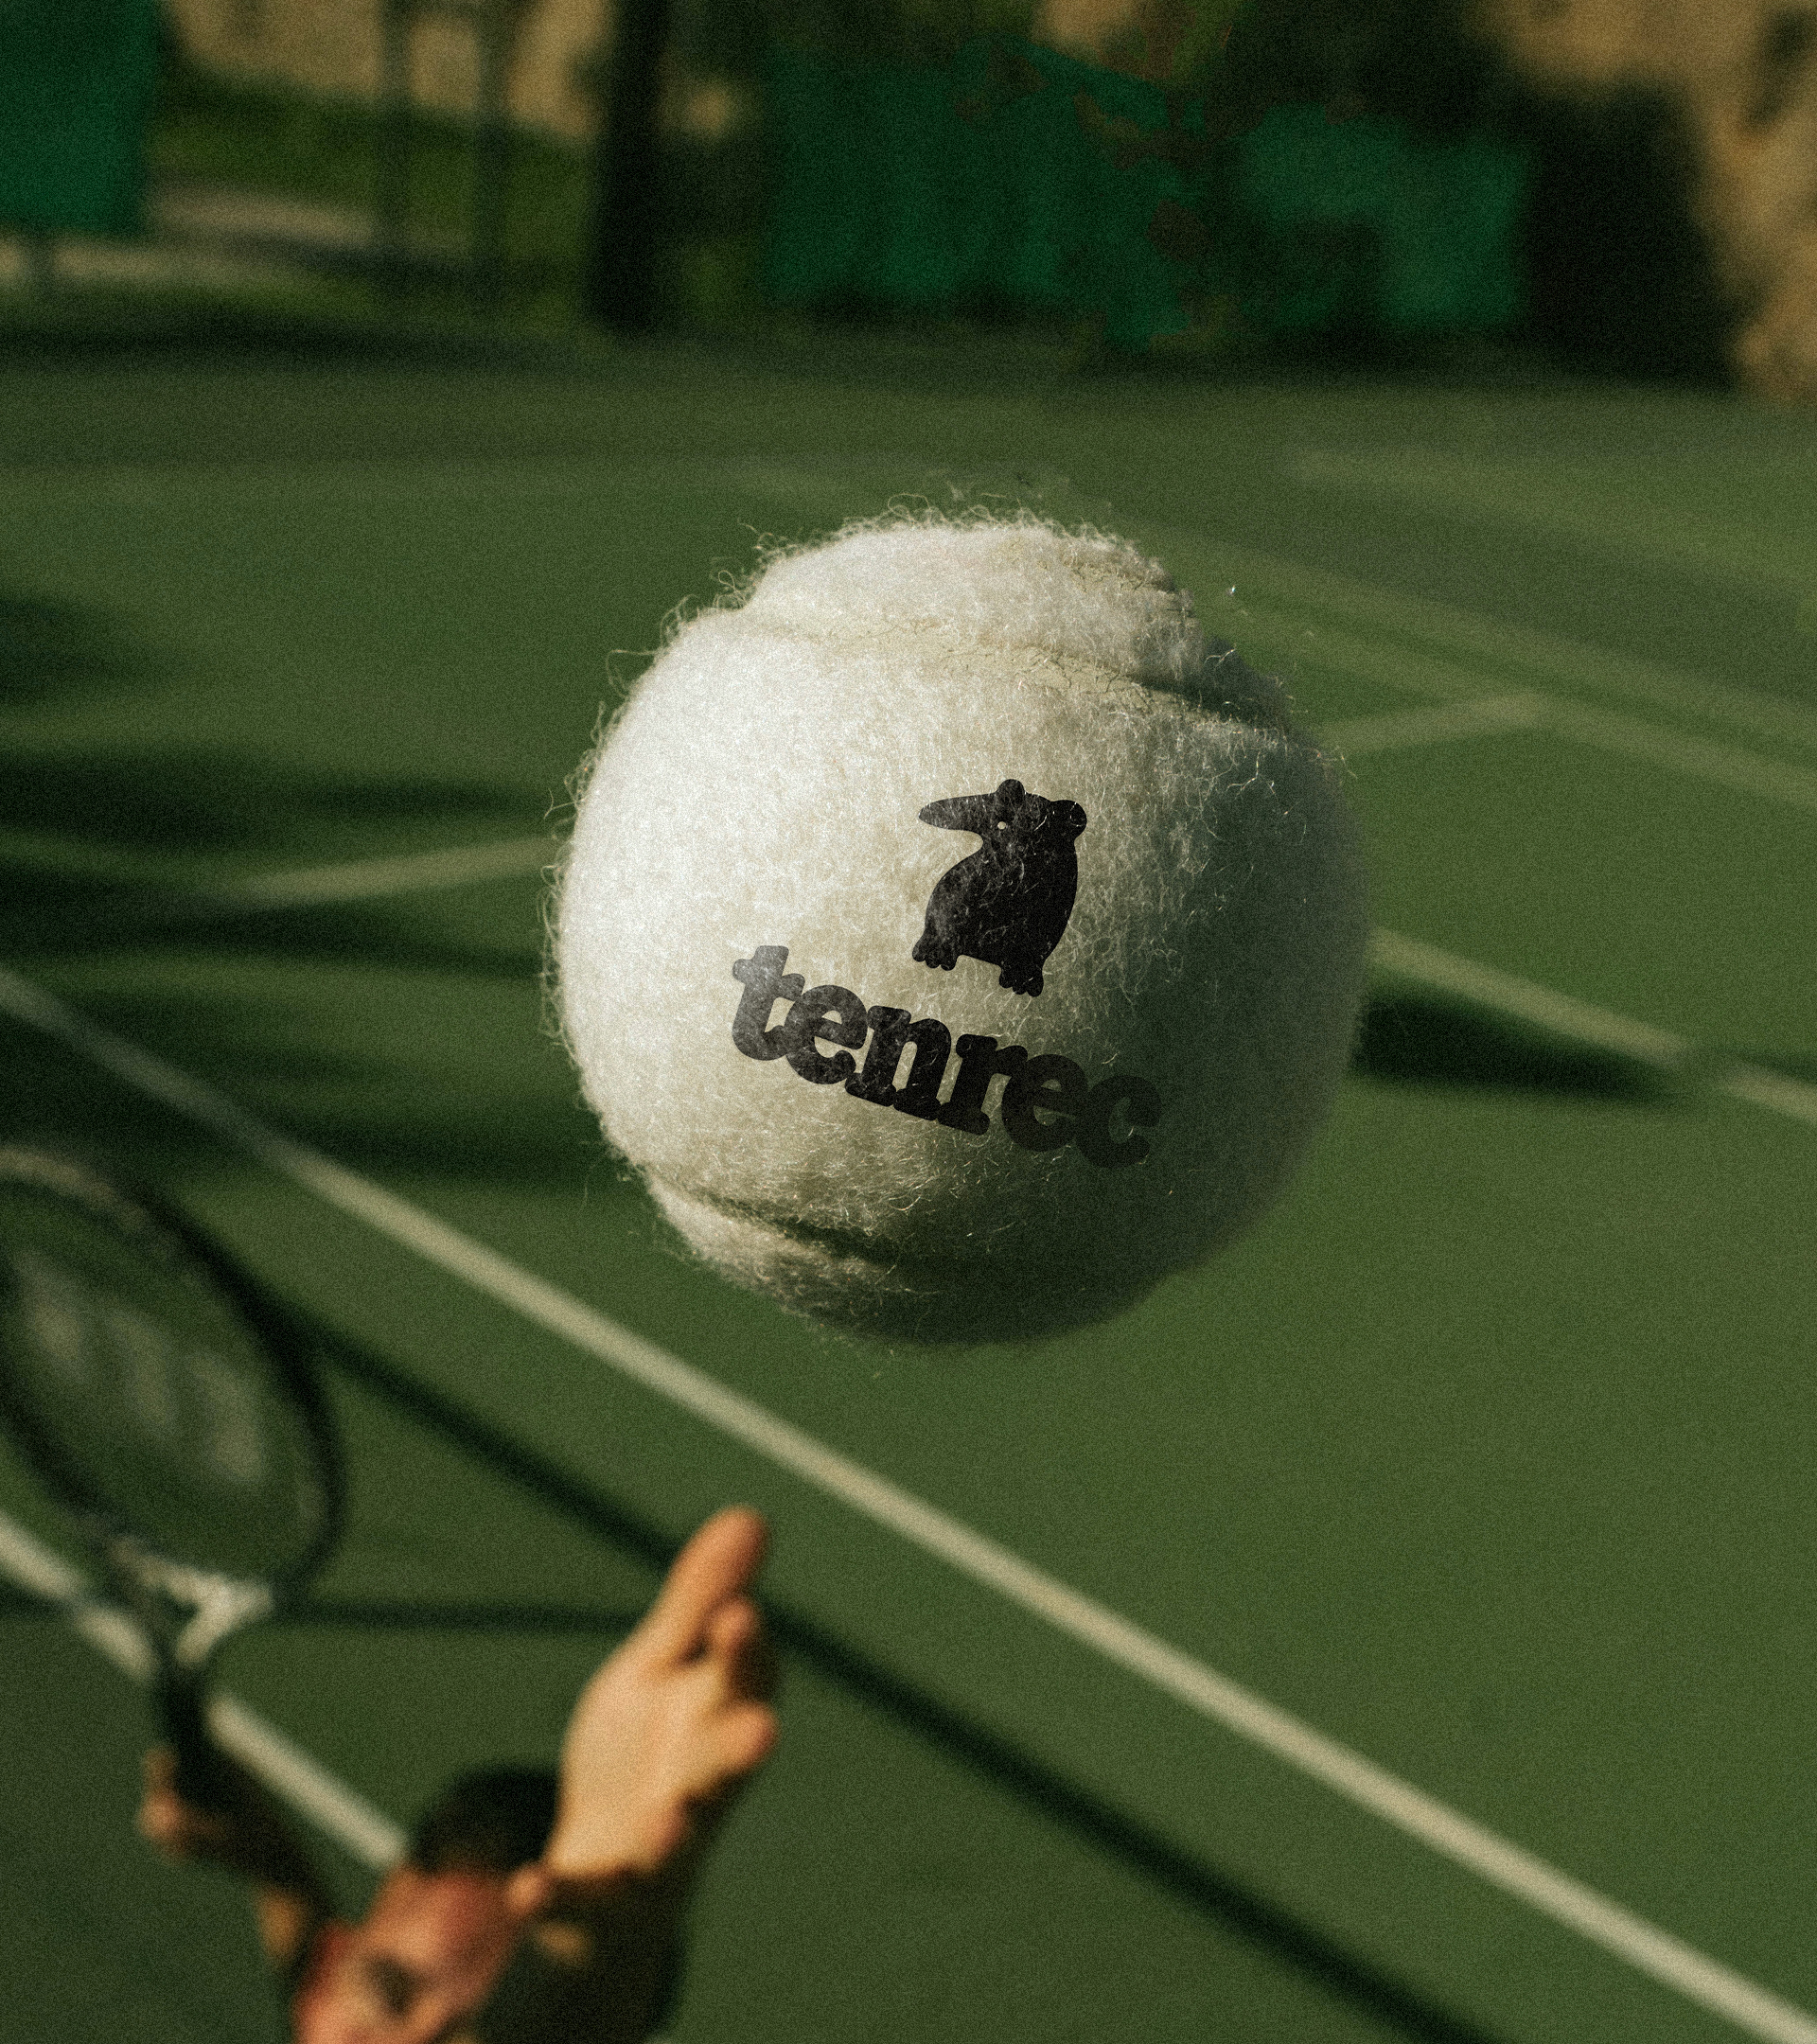 Tenrec: A Tennis Experience for Everyone